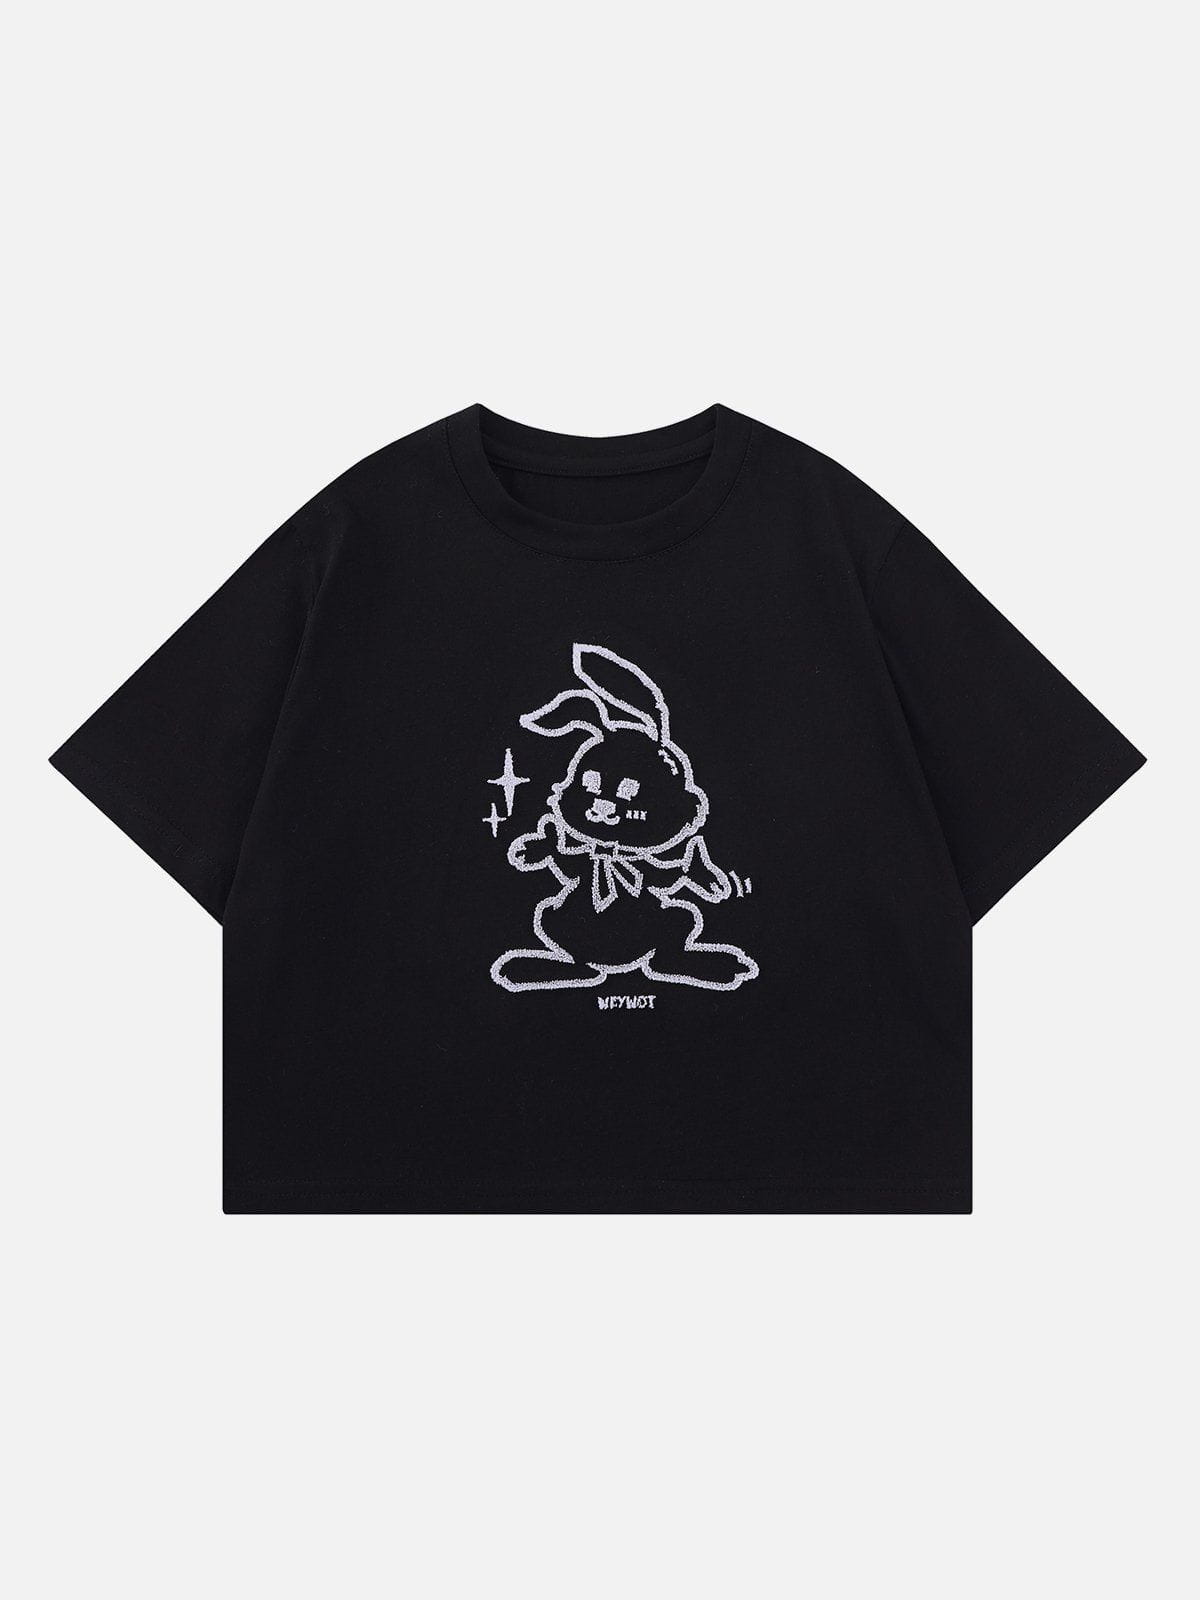 Sneakerland™ - Rabbit Embroidery Tee